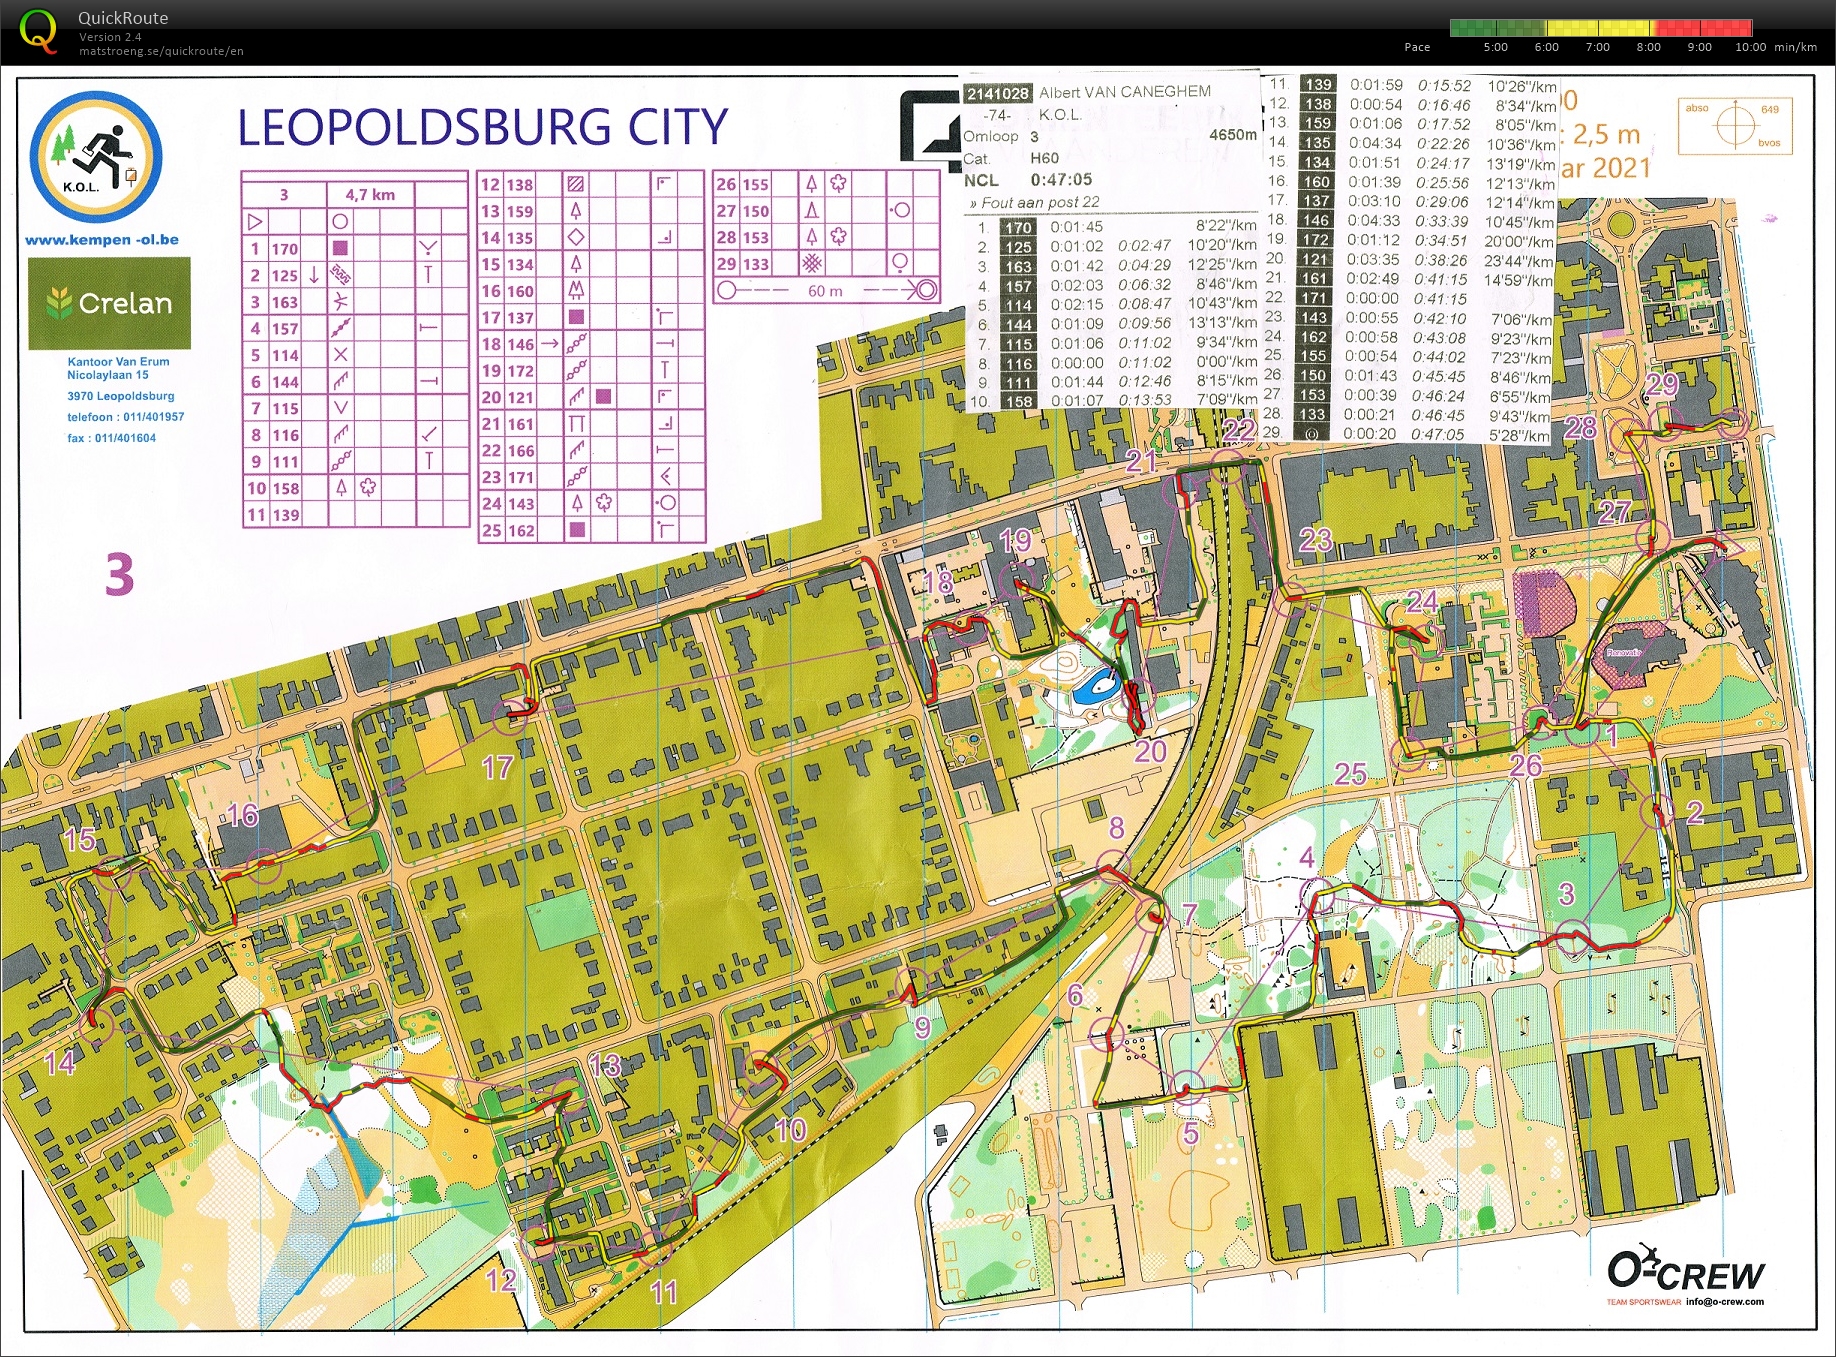 Leopoldsburg City (06-06-2021)